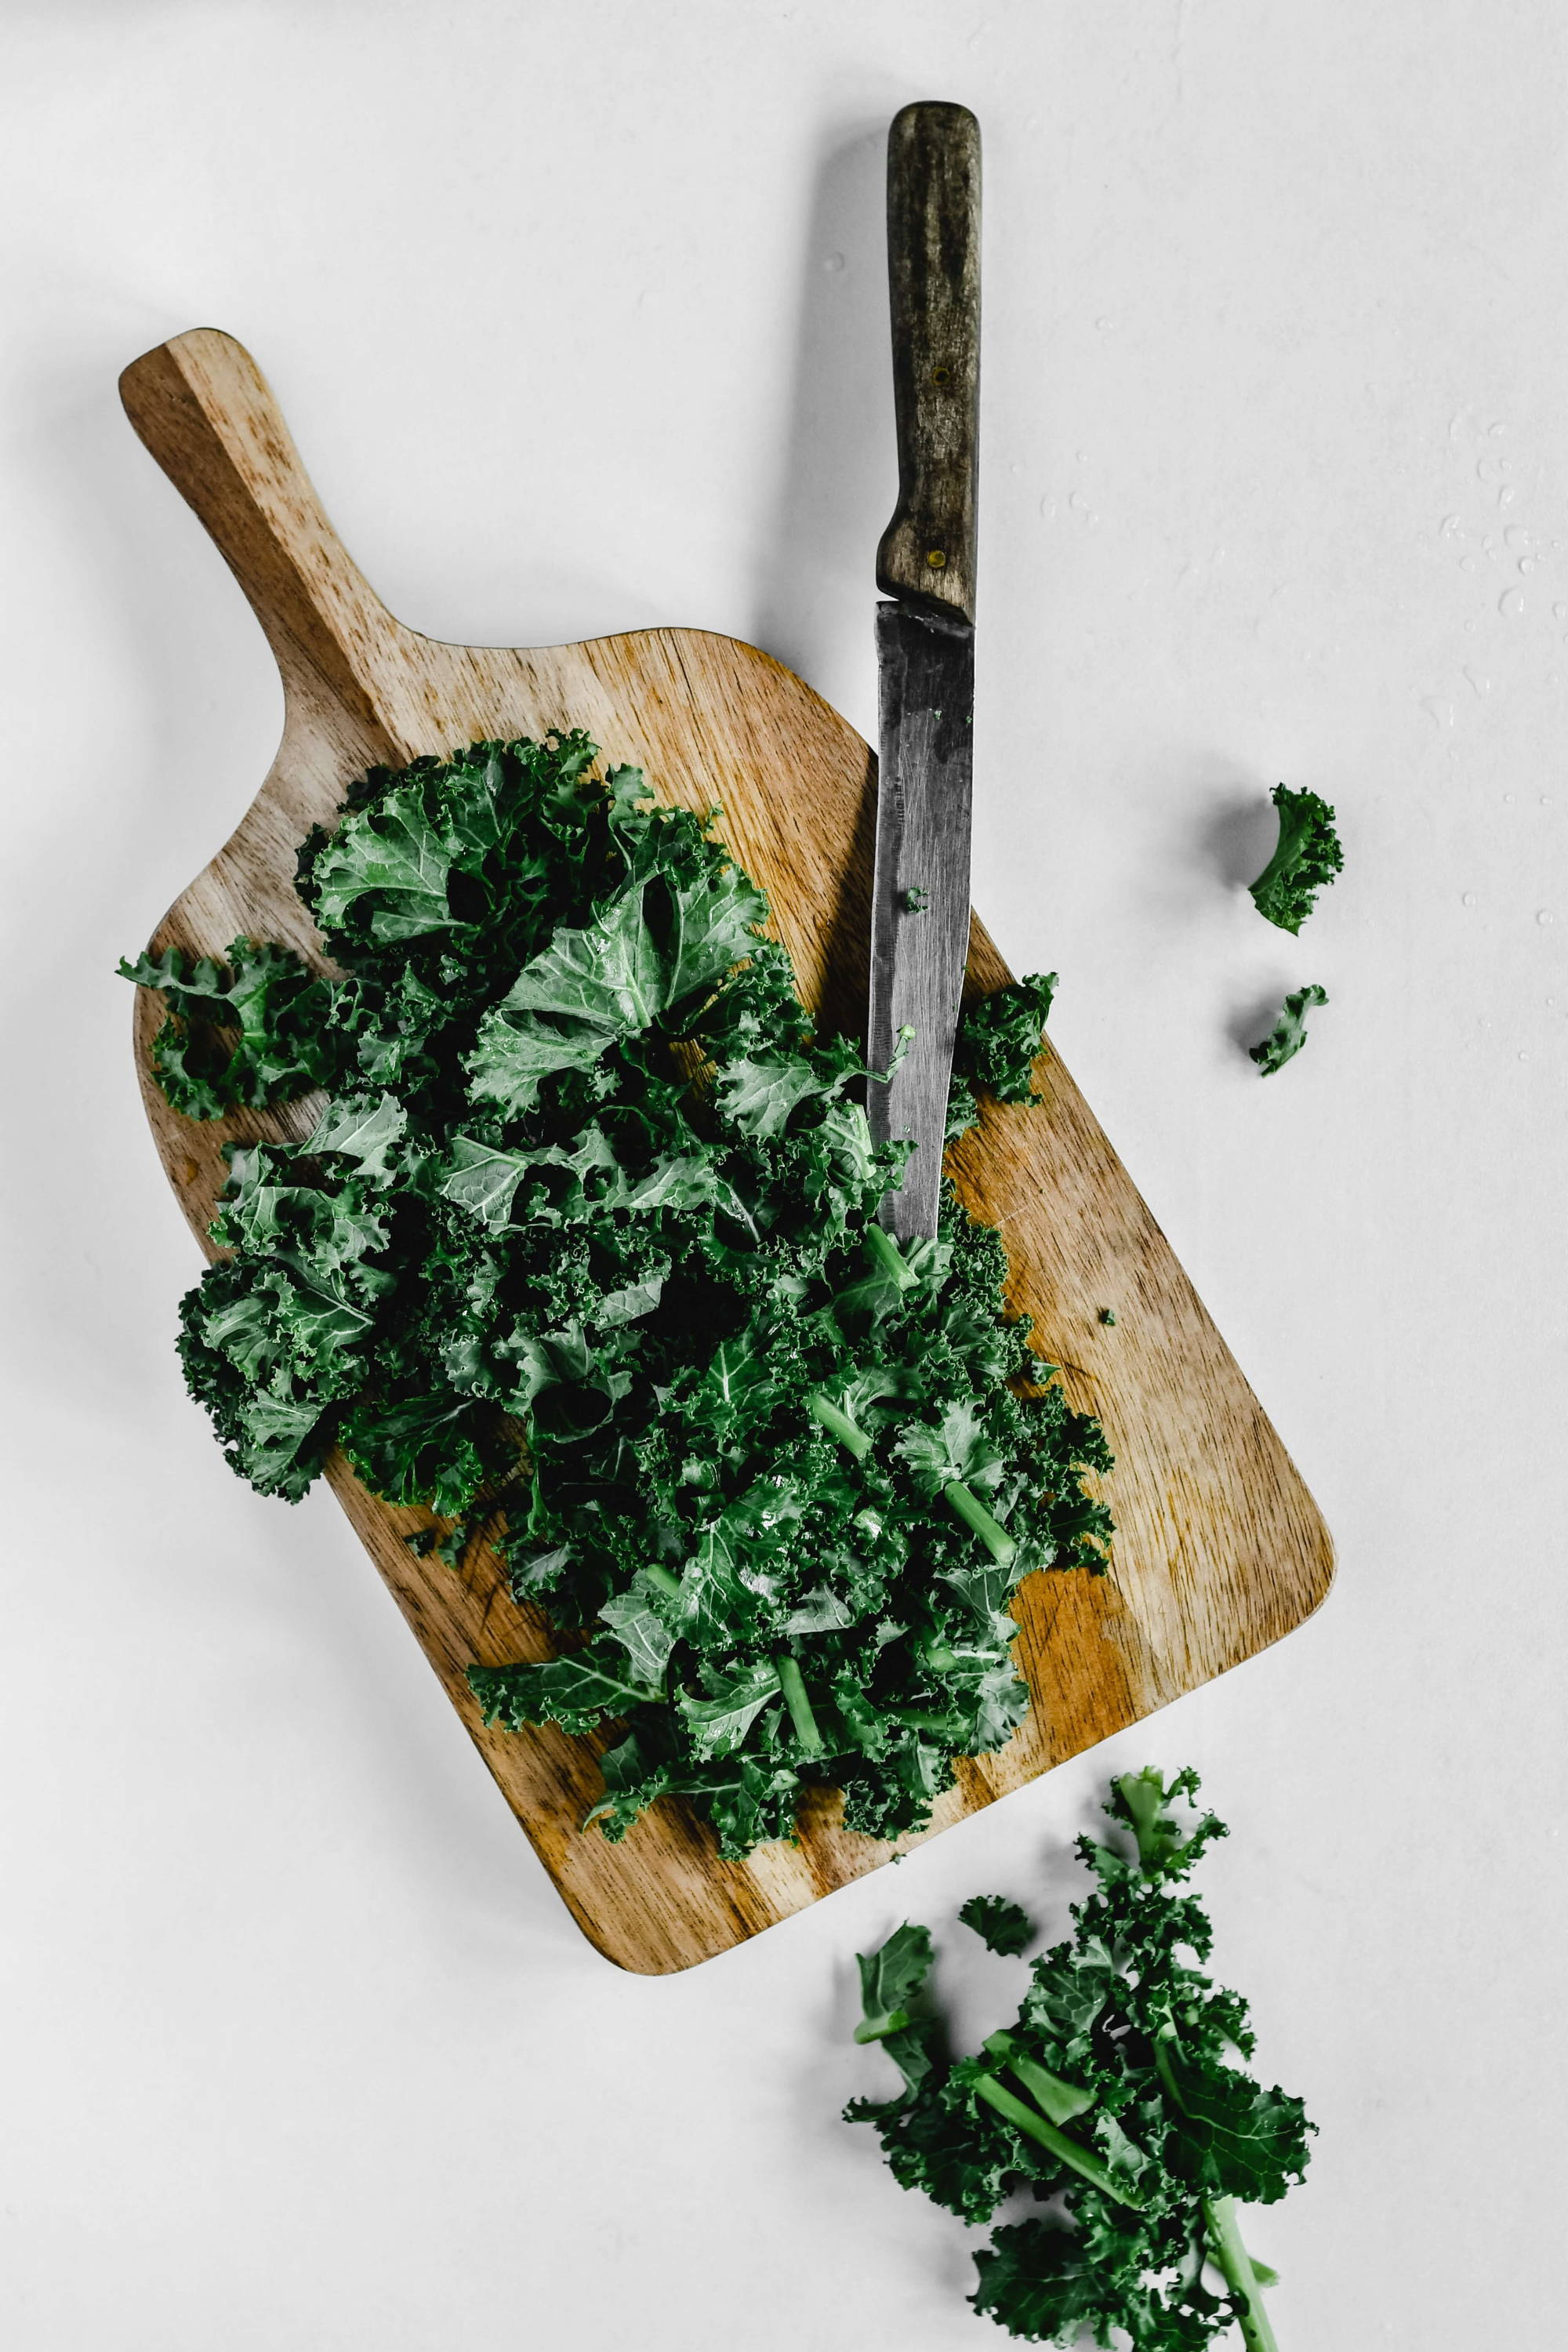 Kale on a chopping board